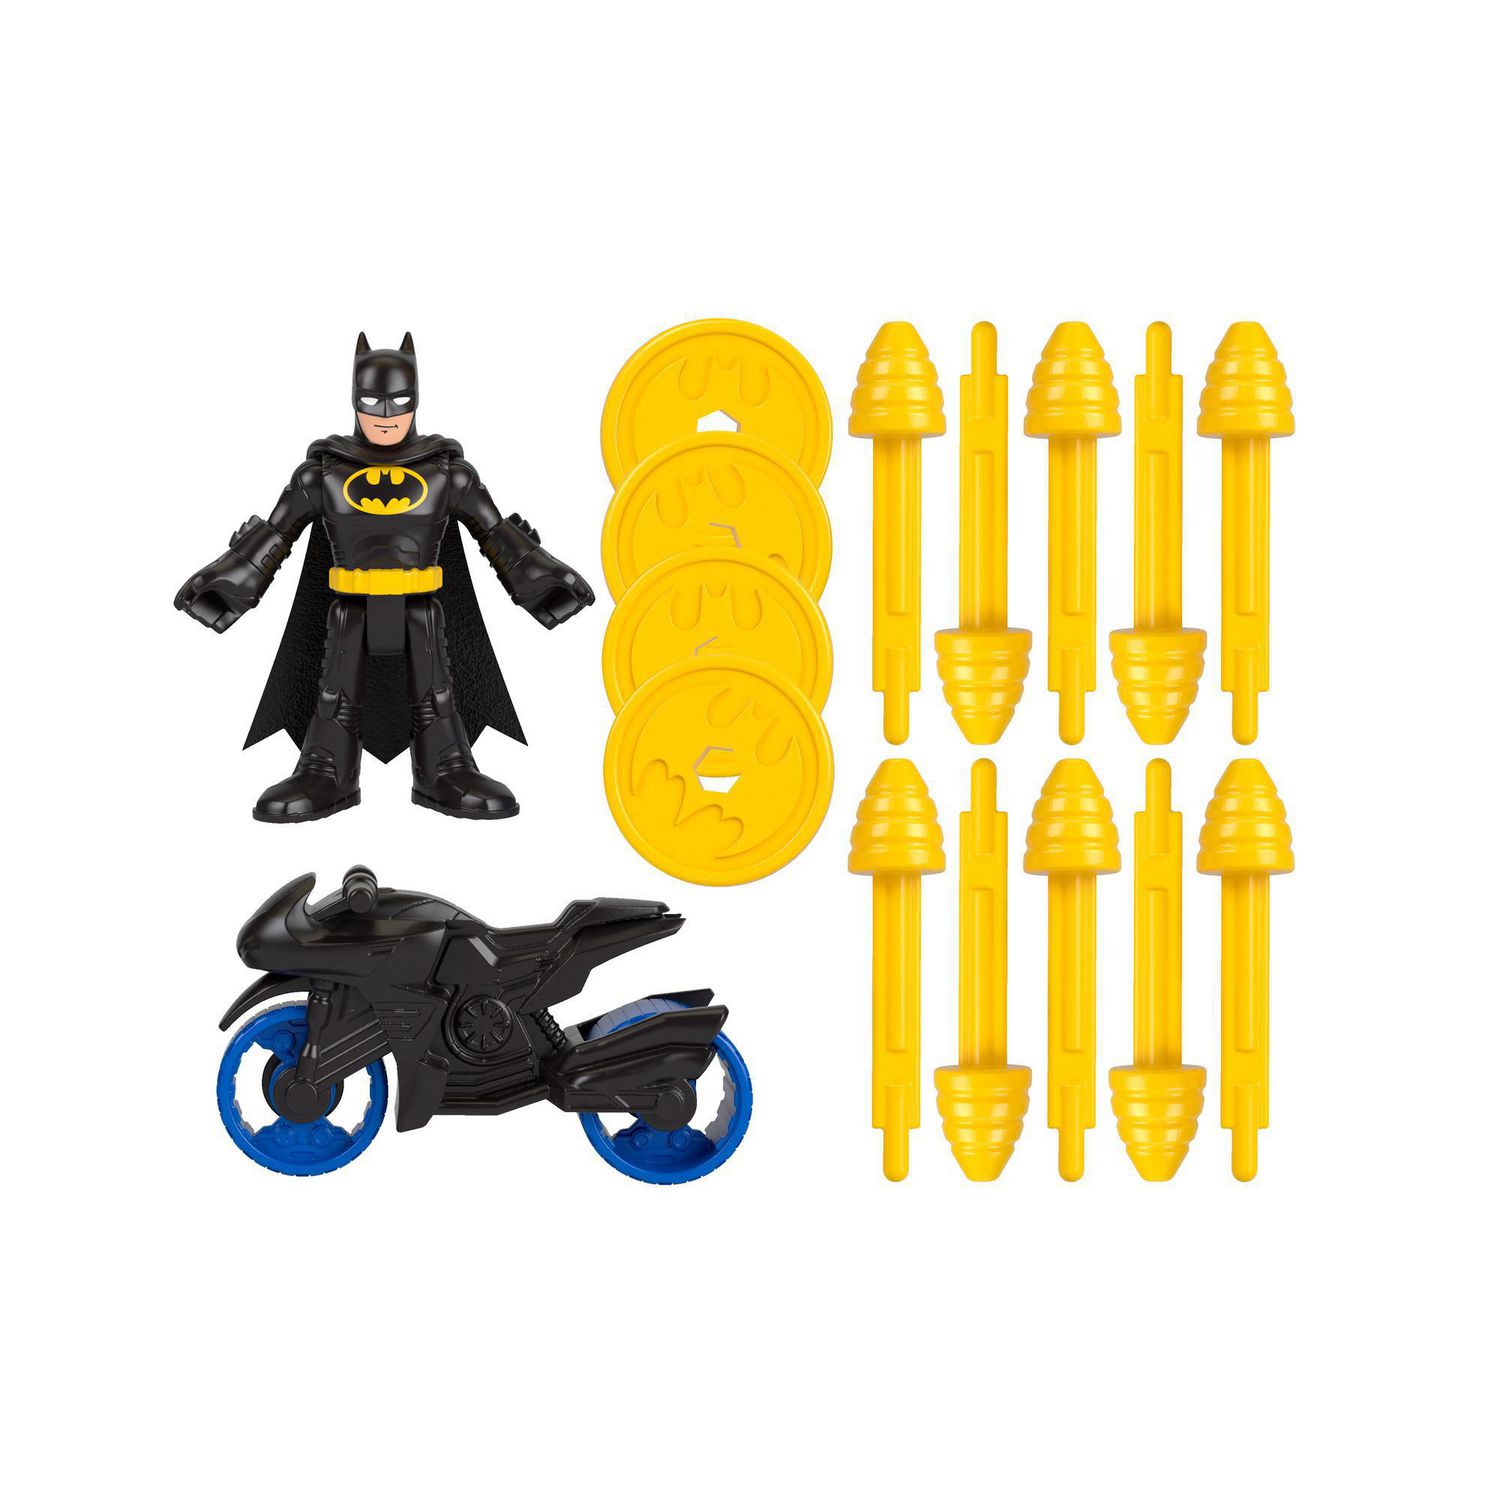 Fisher-Price Imaginext DC Super Friends Batbot Xtreme | Walmart Canada